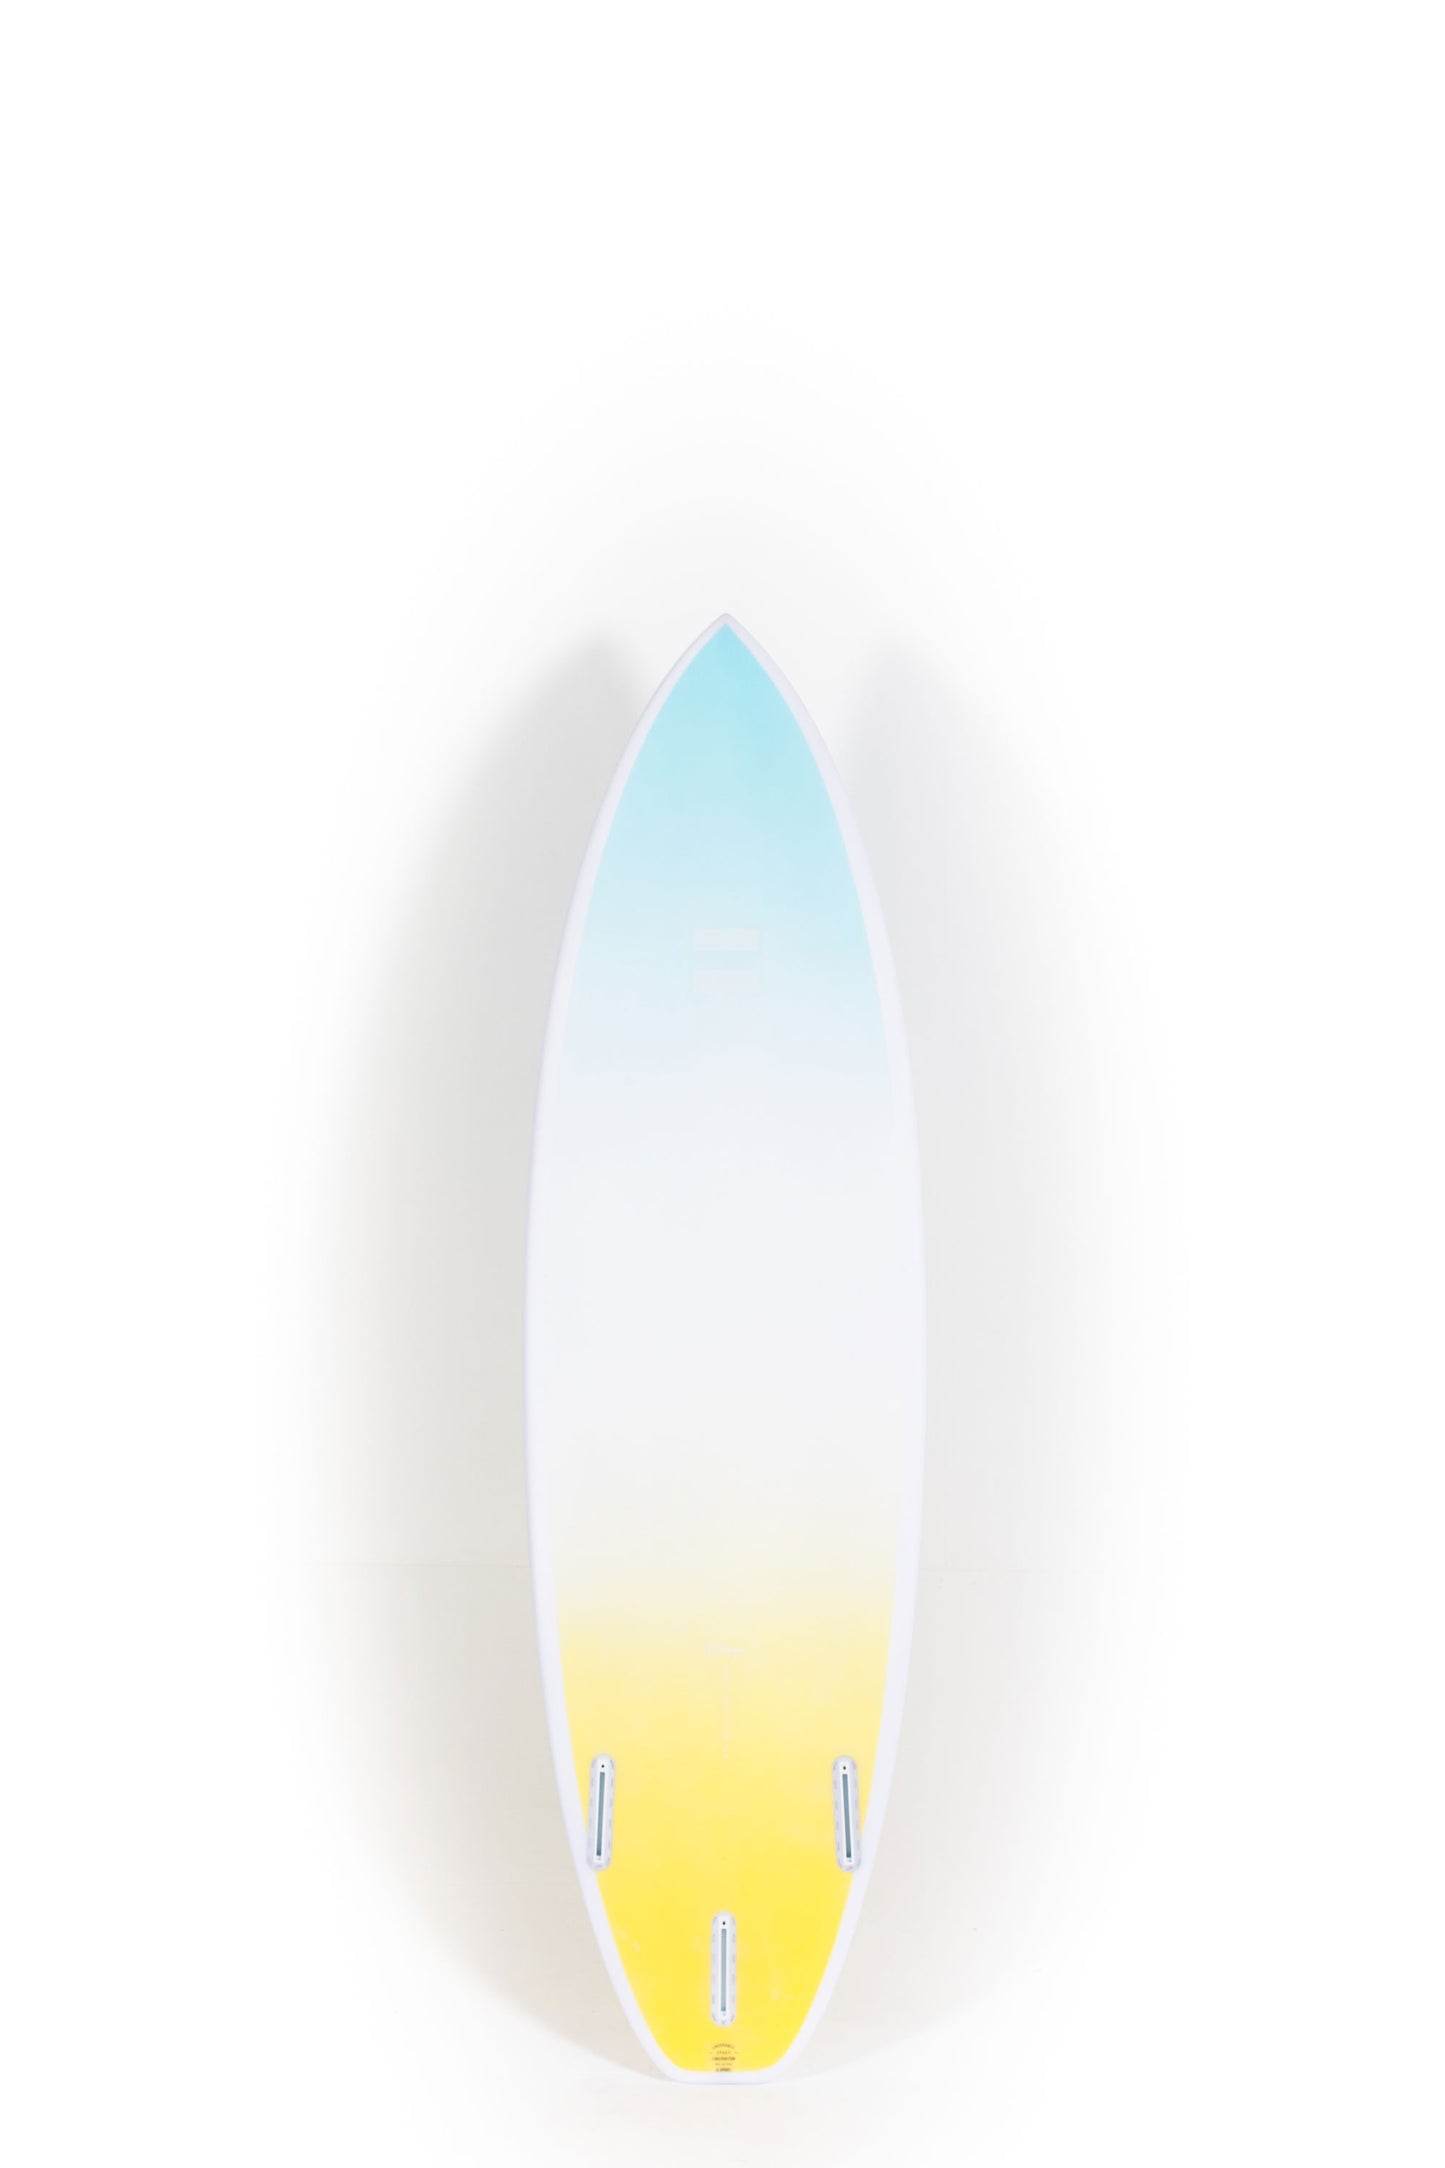 Pukas Surf Shop - Indio Endurance - MIGGY - 6’4” x 20  1/2” x 2 5/8” - 37,96L - TB-INEMCI0604SPA